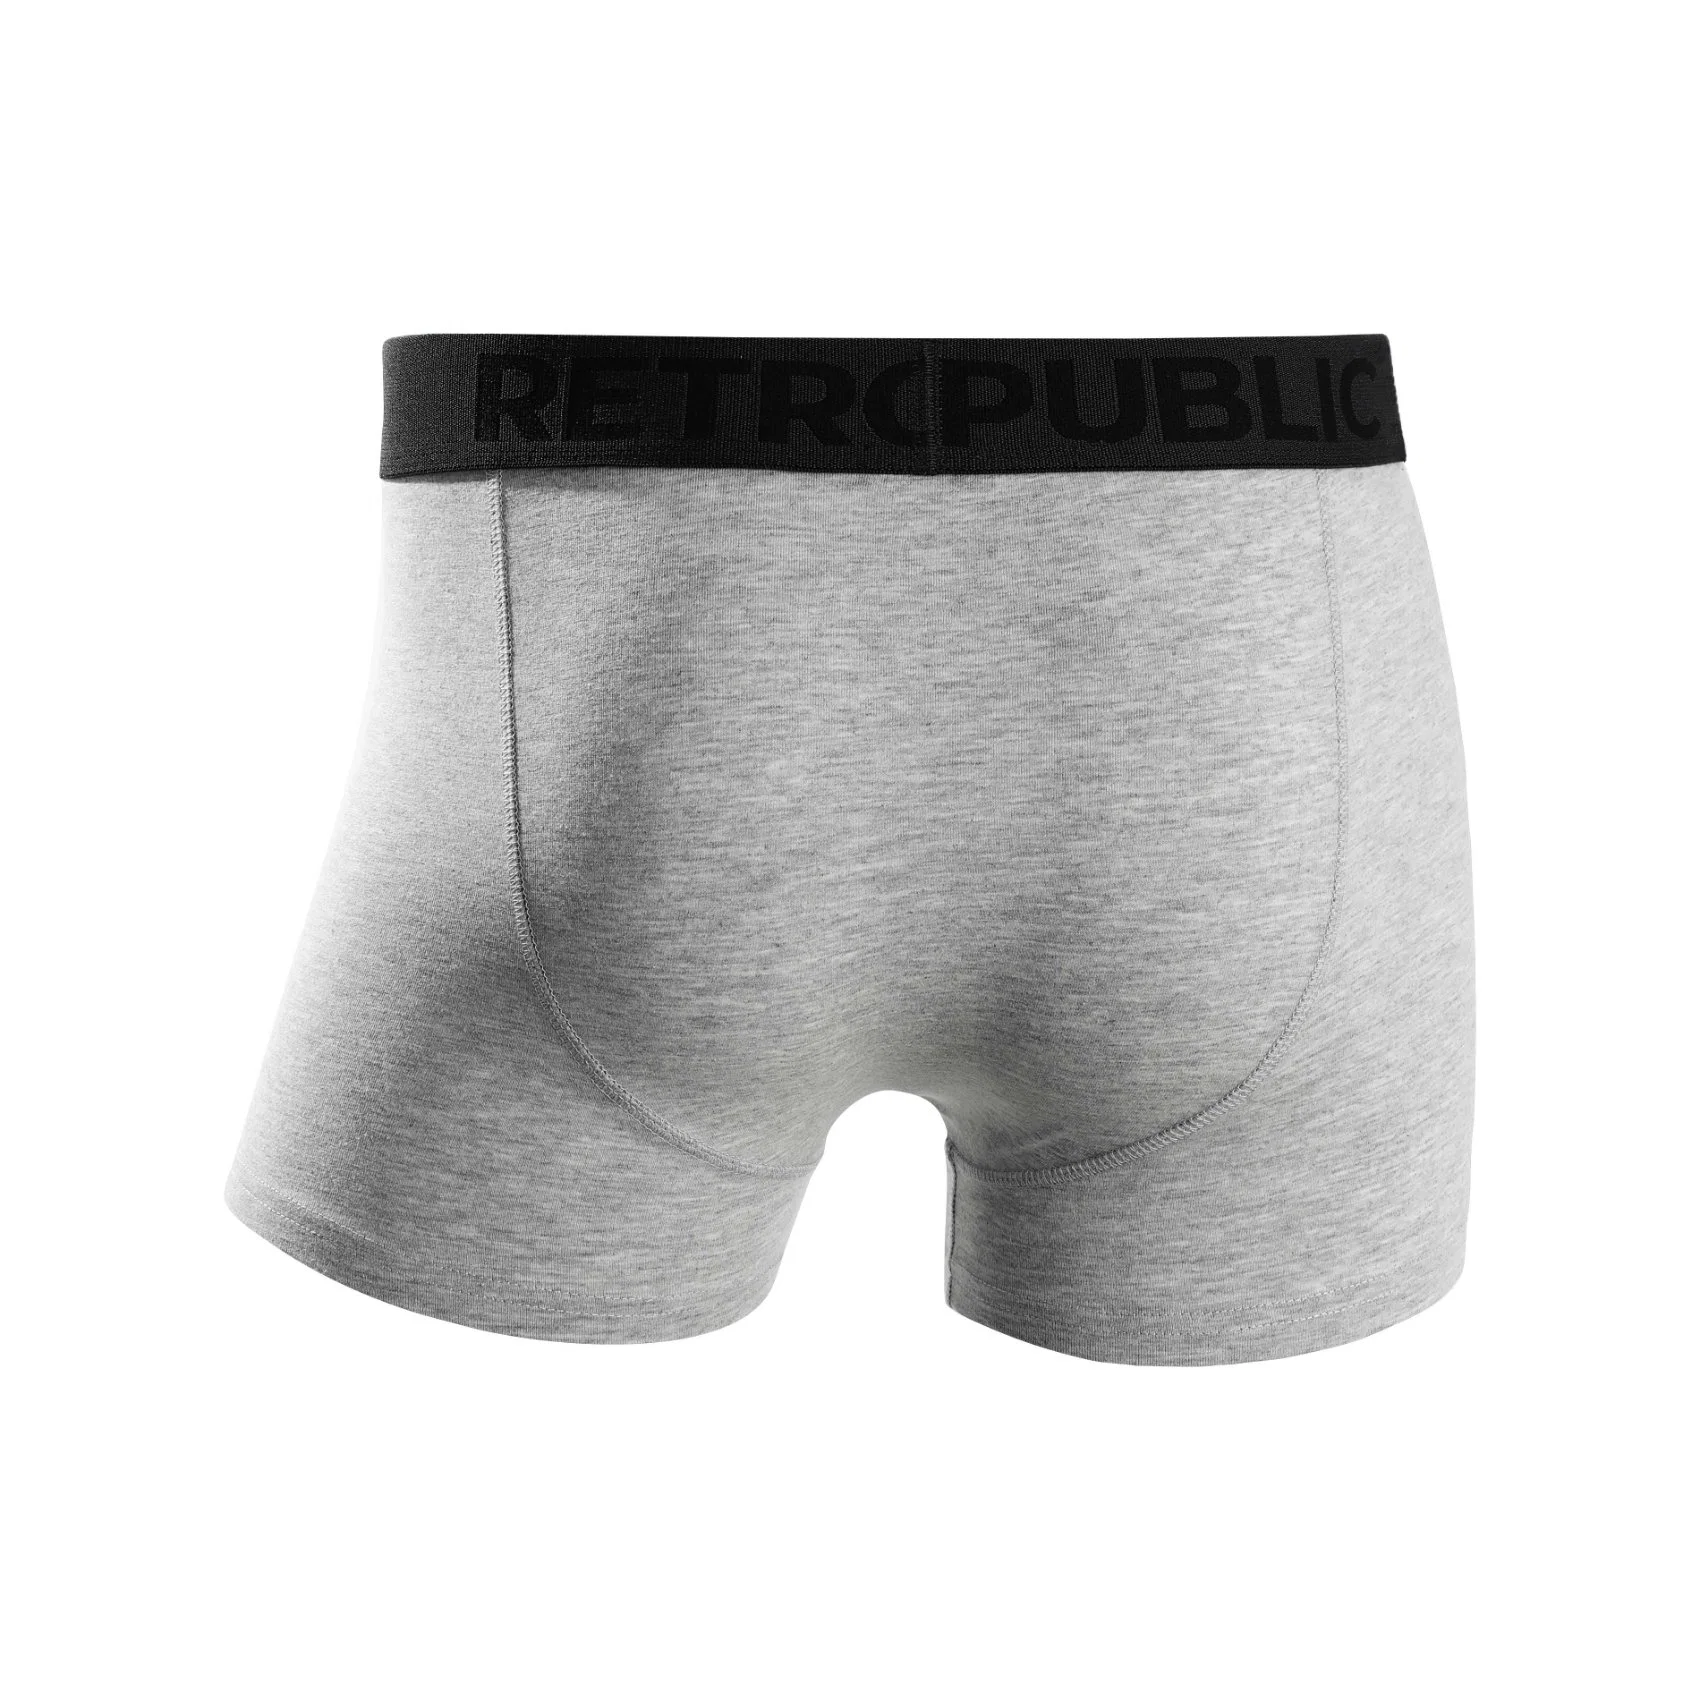 Sexy Mature Men's Underwear Breathable Fabric Panties Large Size Pouch Men's Boxer Briefs